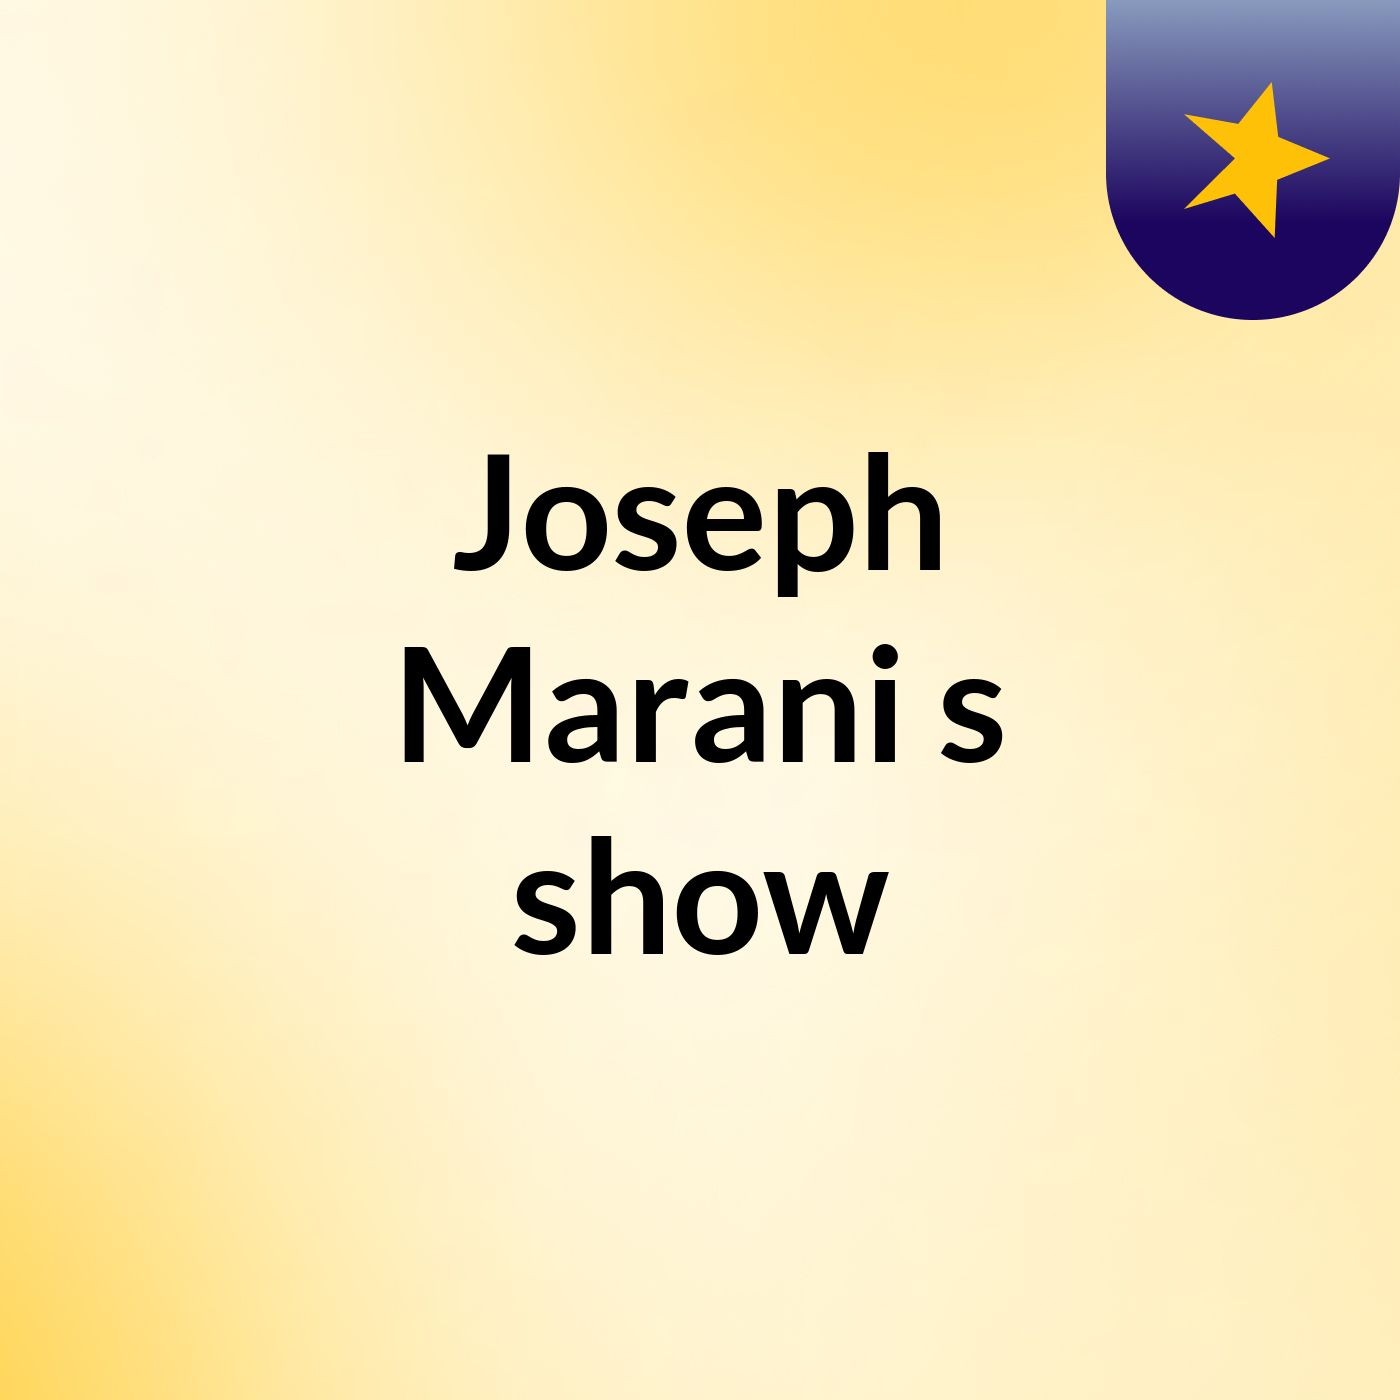 Joseph Marani's show